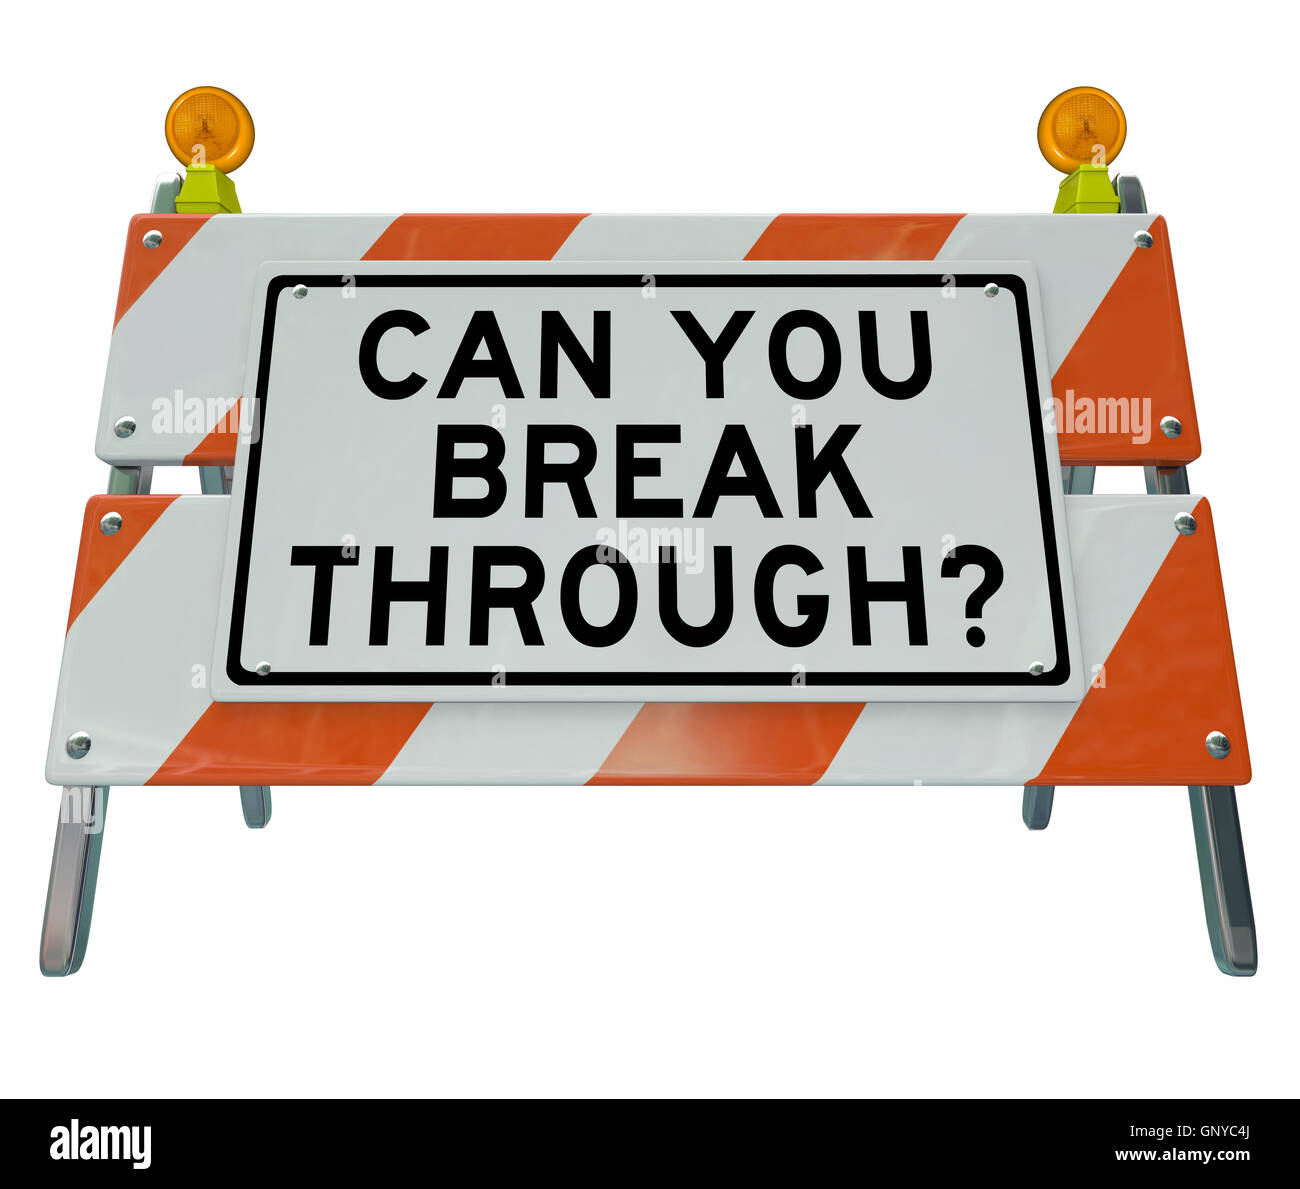 Can You Break Through Question on Barricade Roadblock Stock Photo